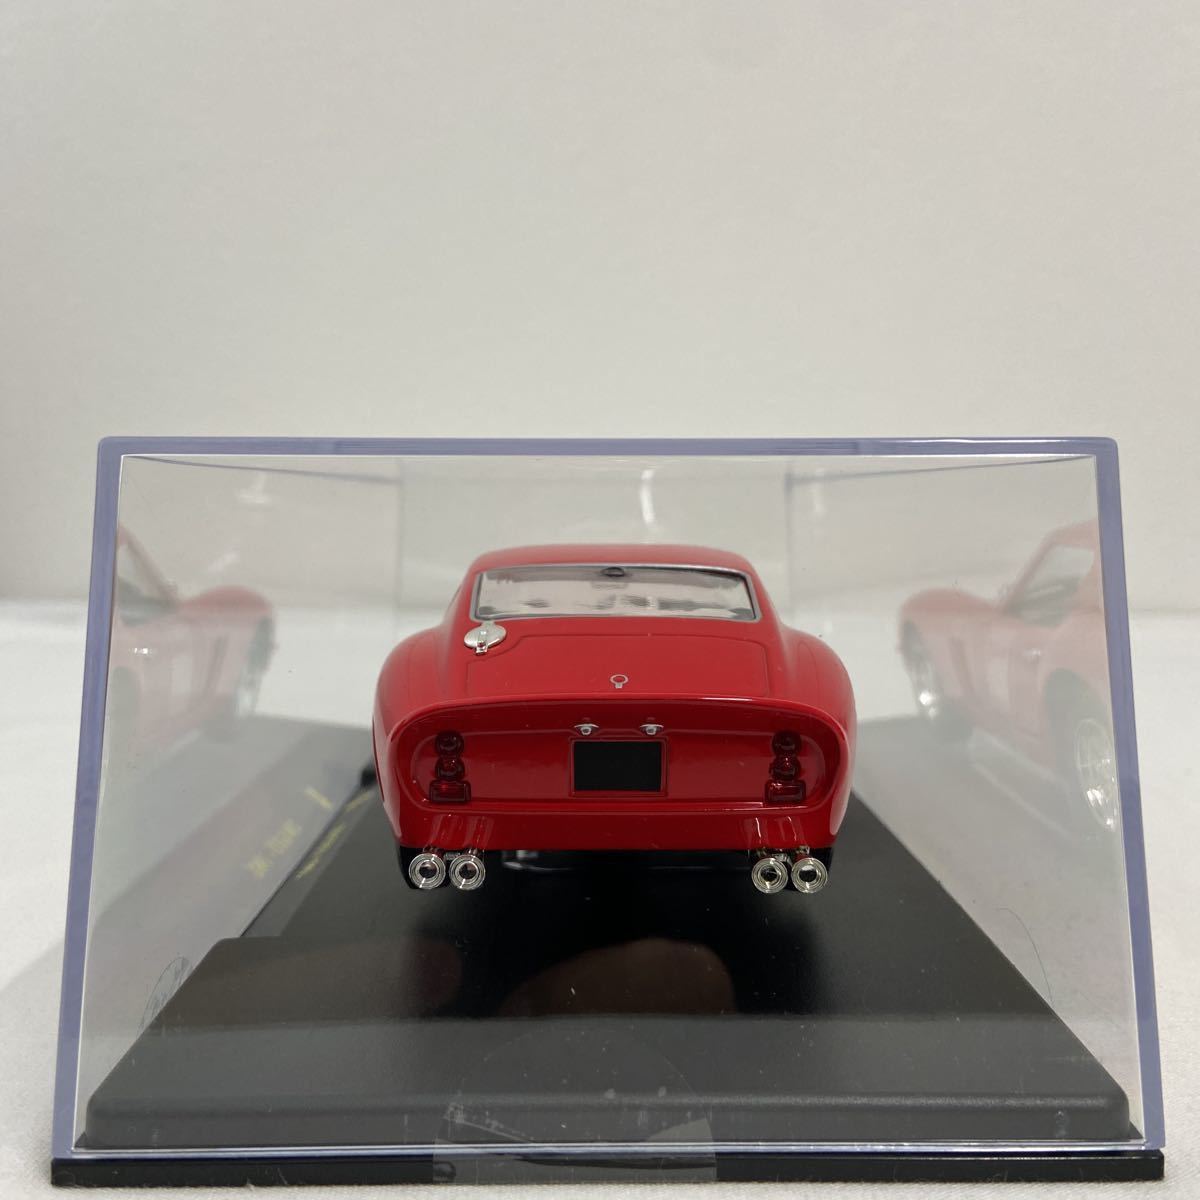  der Goss tea nire* grande .* Ferrari collection 1/24 #10 FERRARI 250GTO 1962 year Red final product minicar model car 